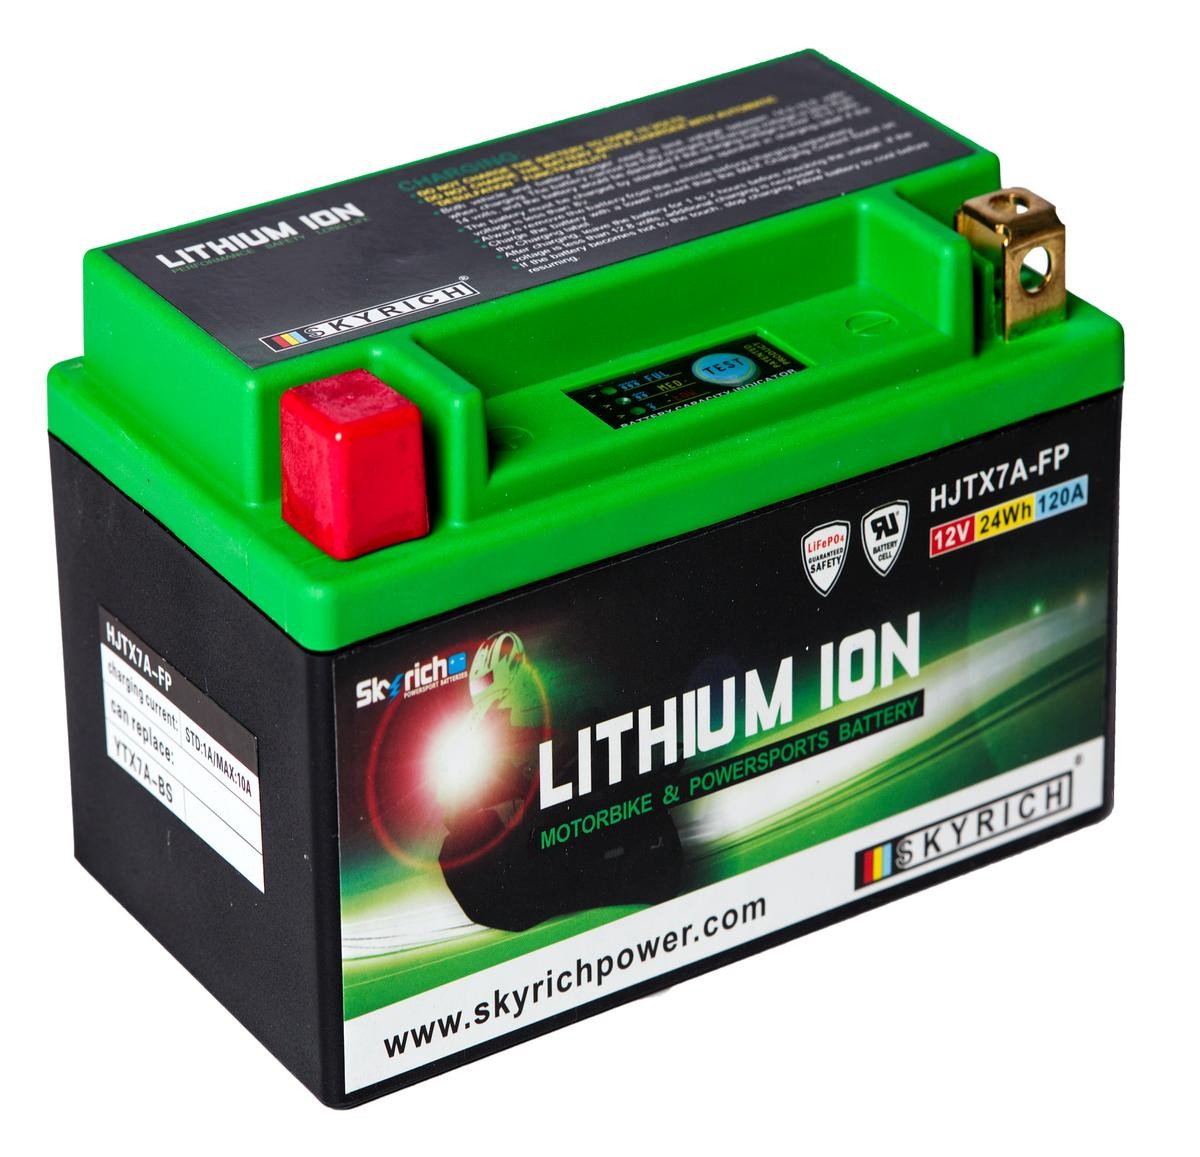 QINGQI QM50 Batterie 12V 2Ah 120A N Li-Ionen-Batterie SKYRICH LITHIUM ION HJTX7A-FP